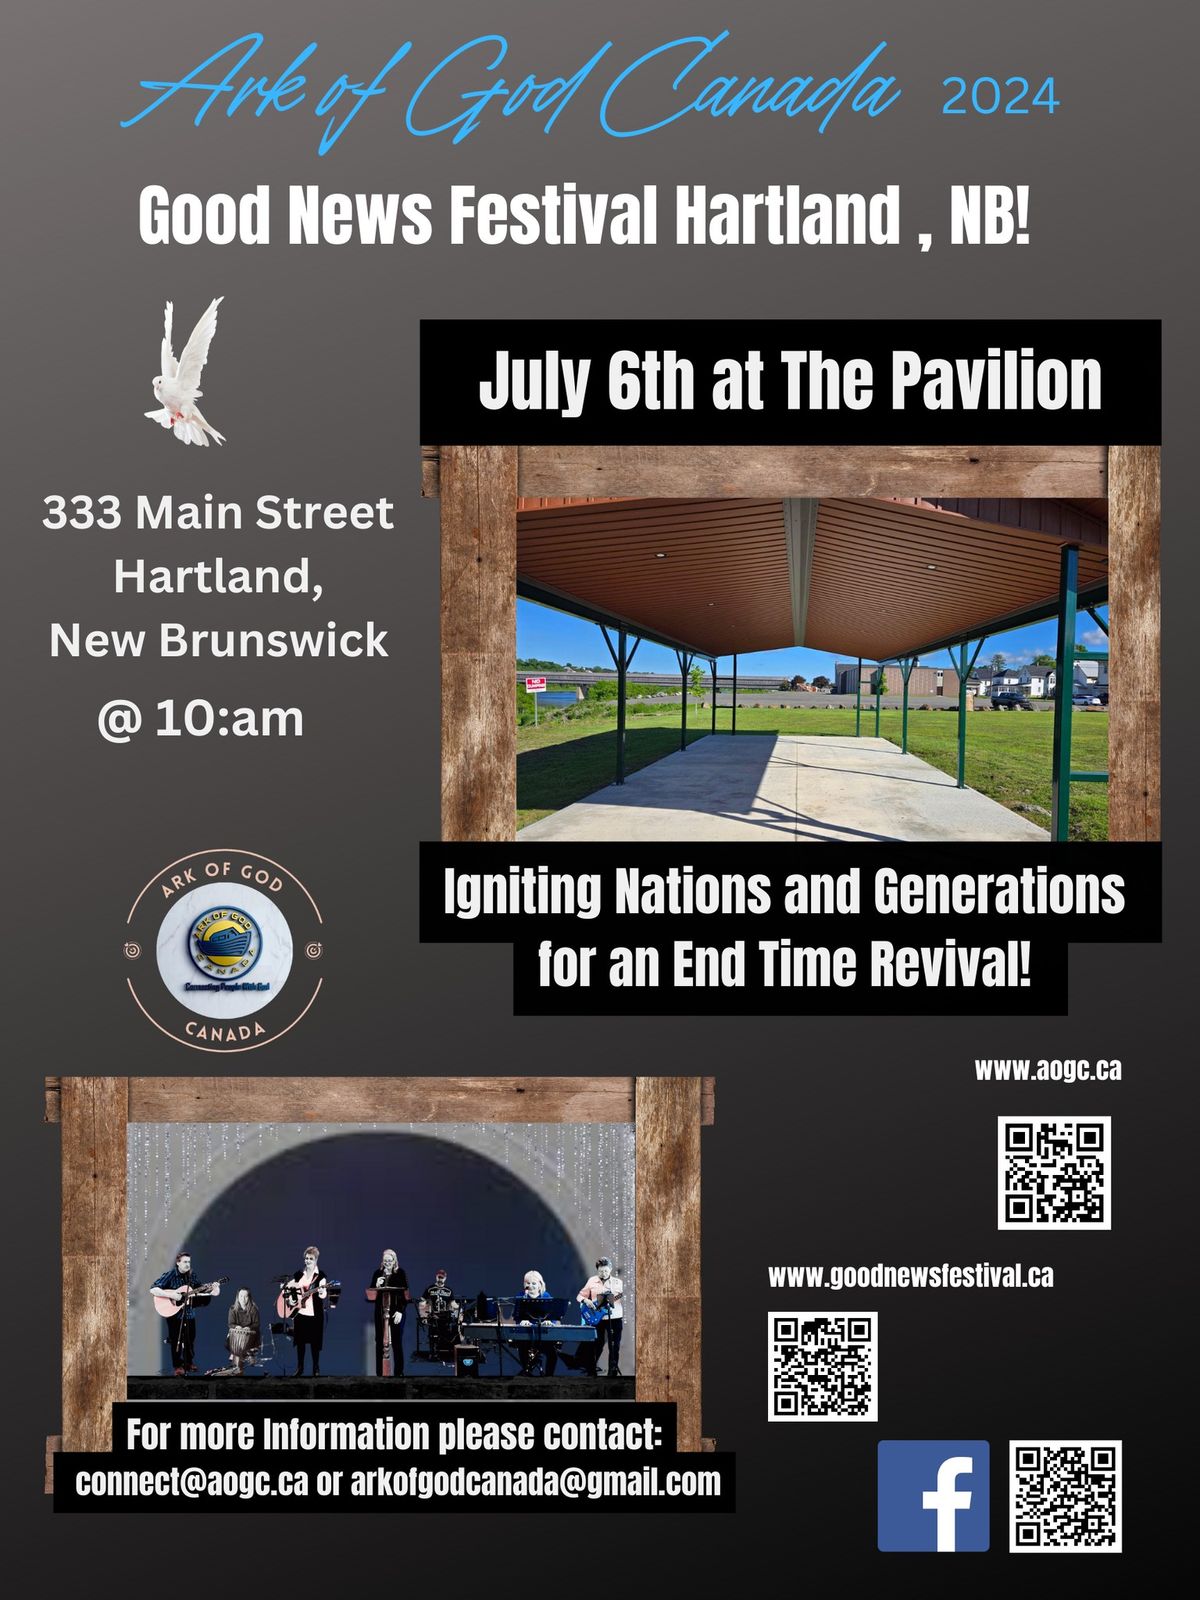 Good News Festival Hartland 